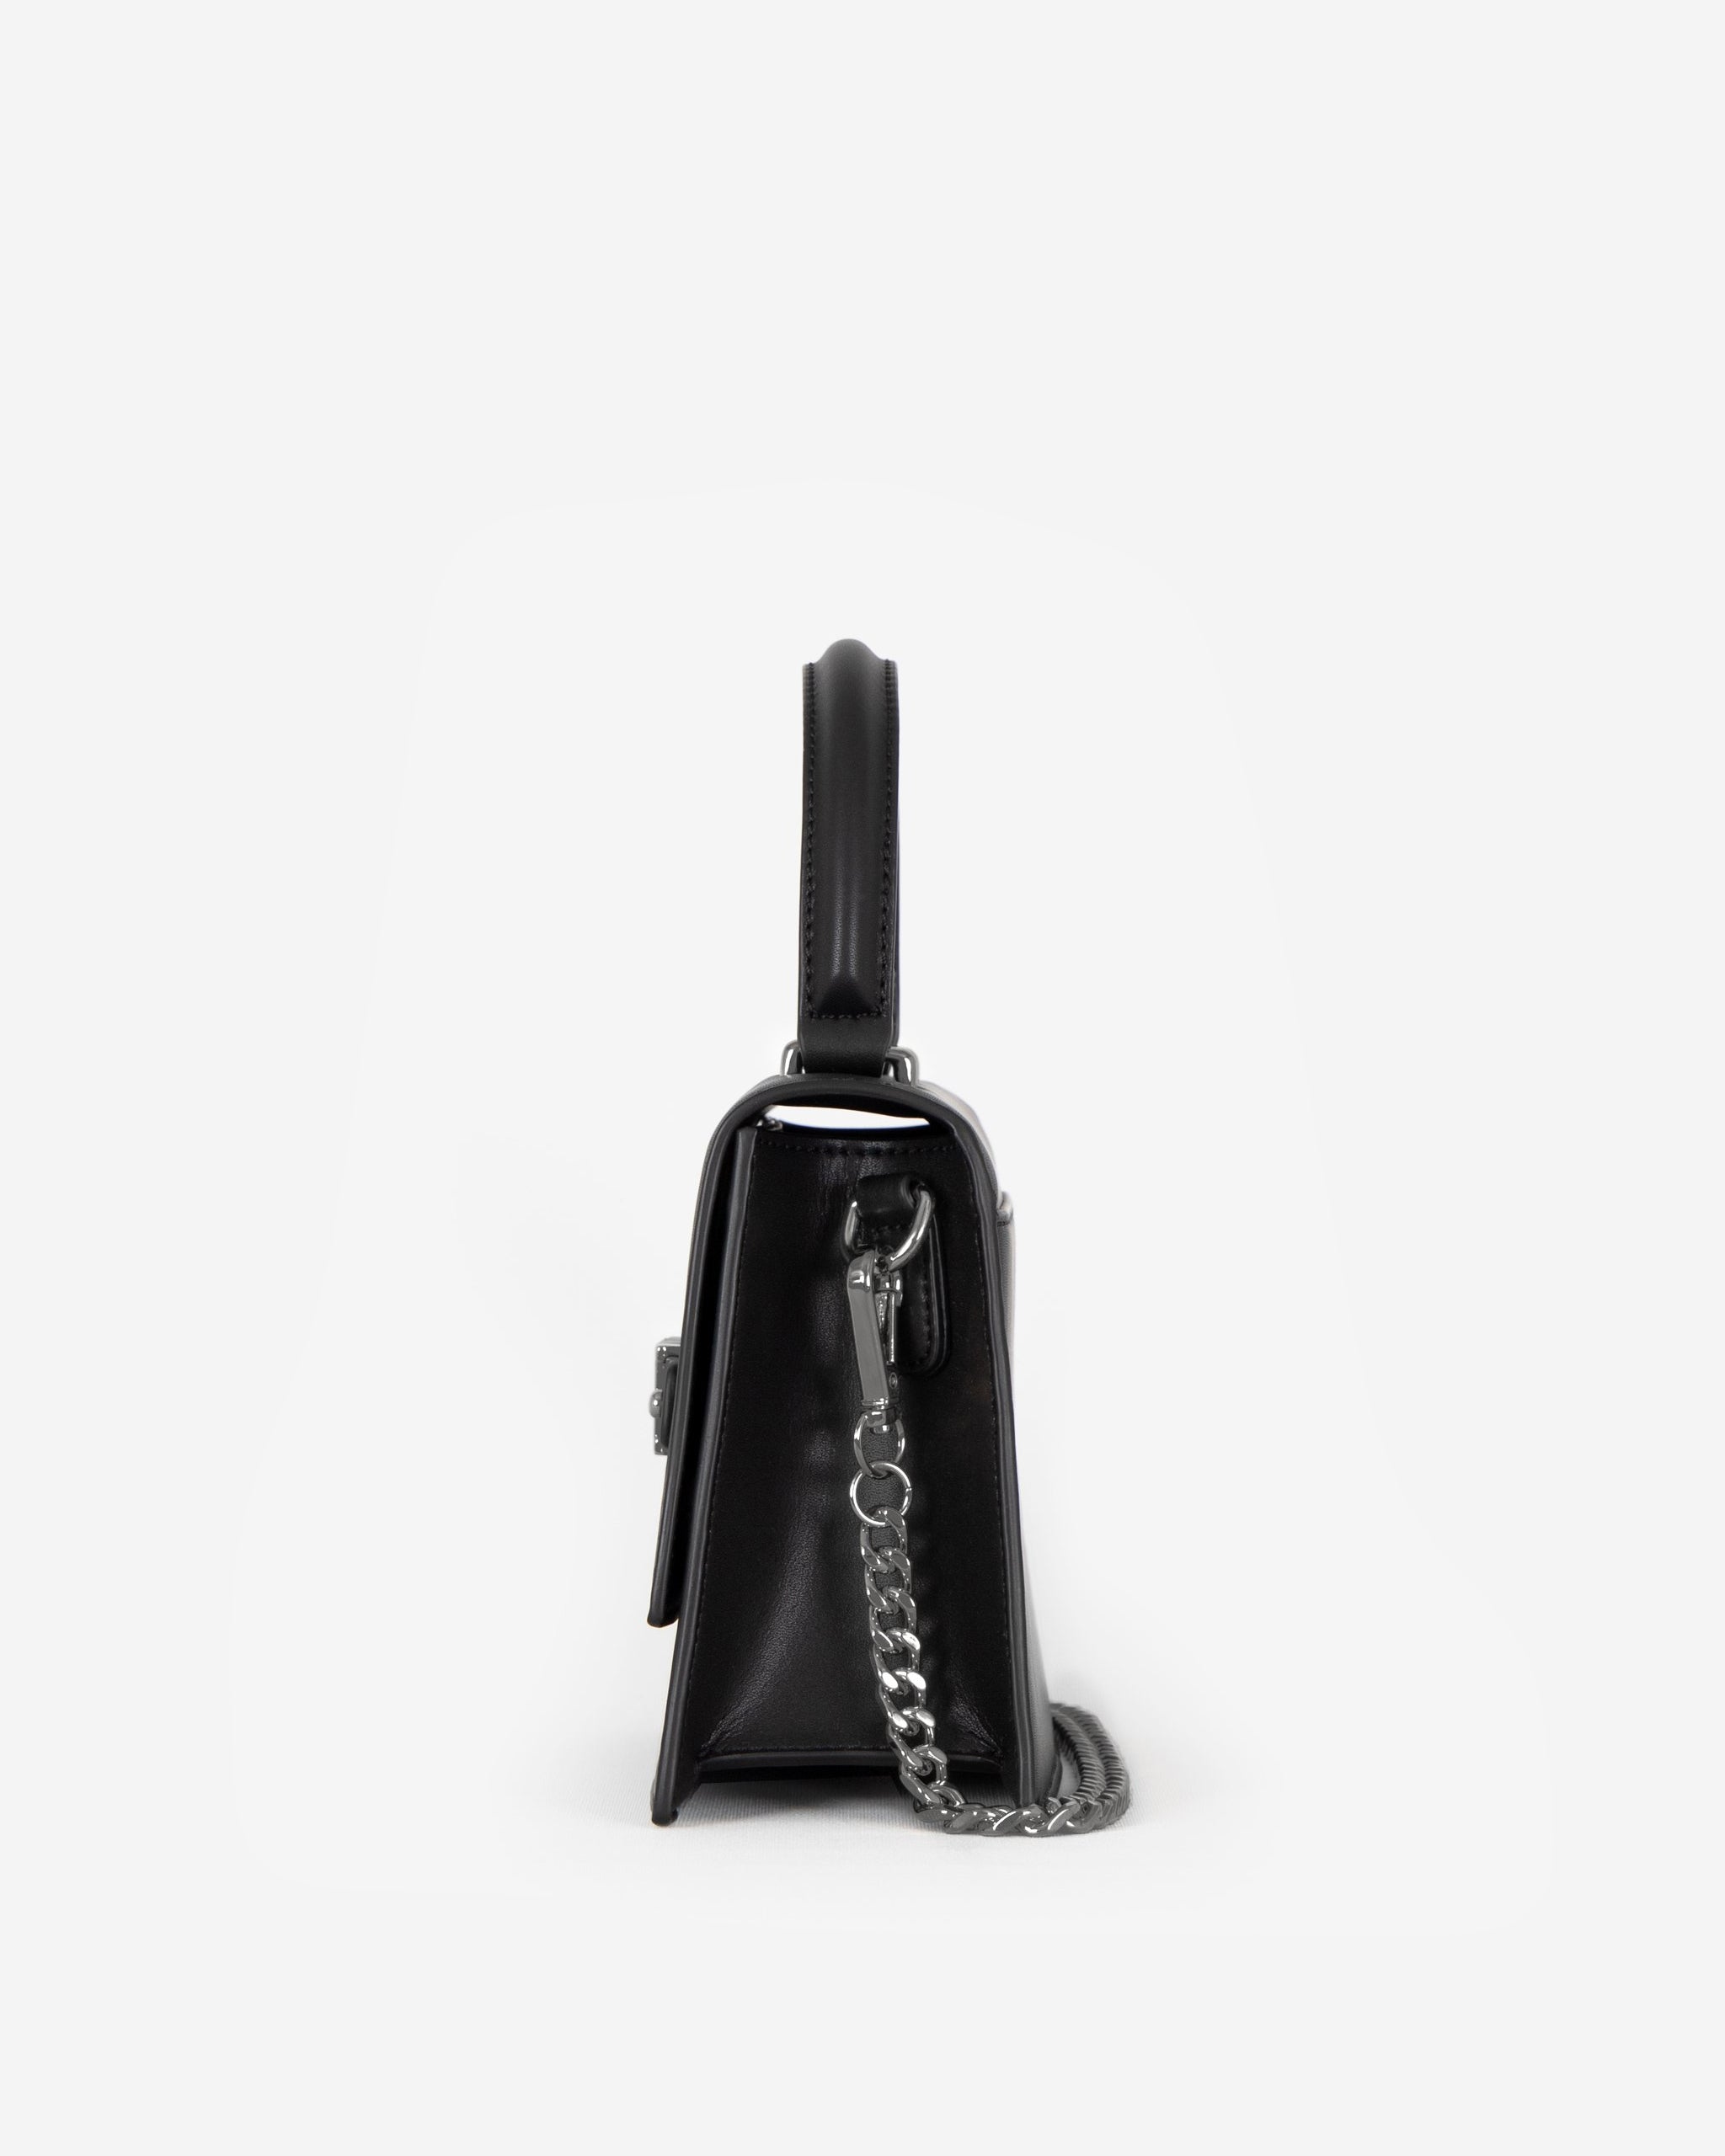 Evening Bag in Black/Gunmetal with Personalised Hardware